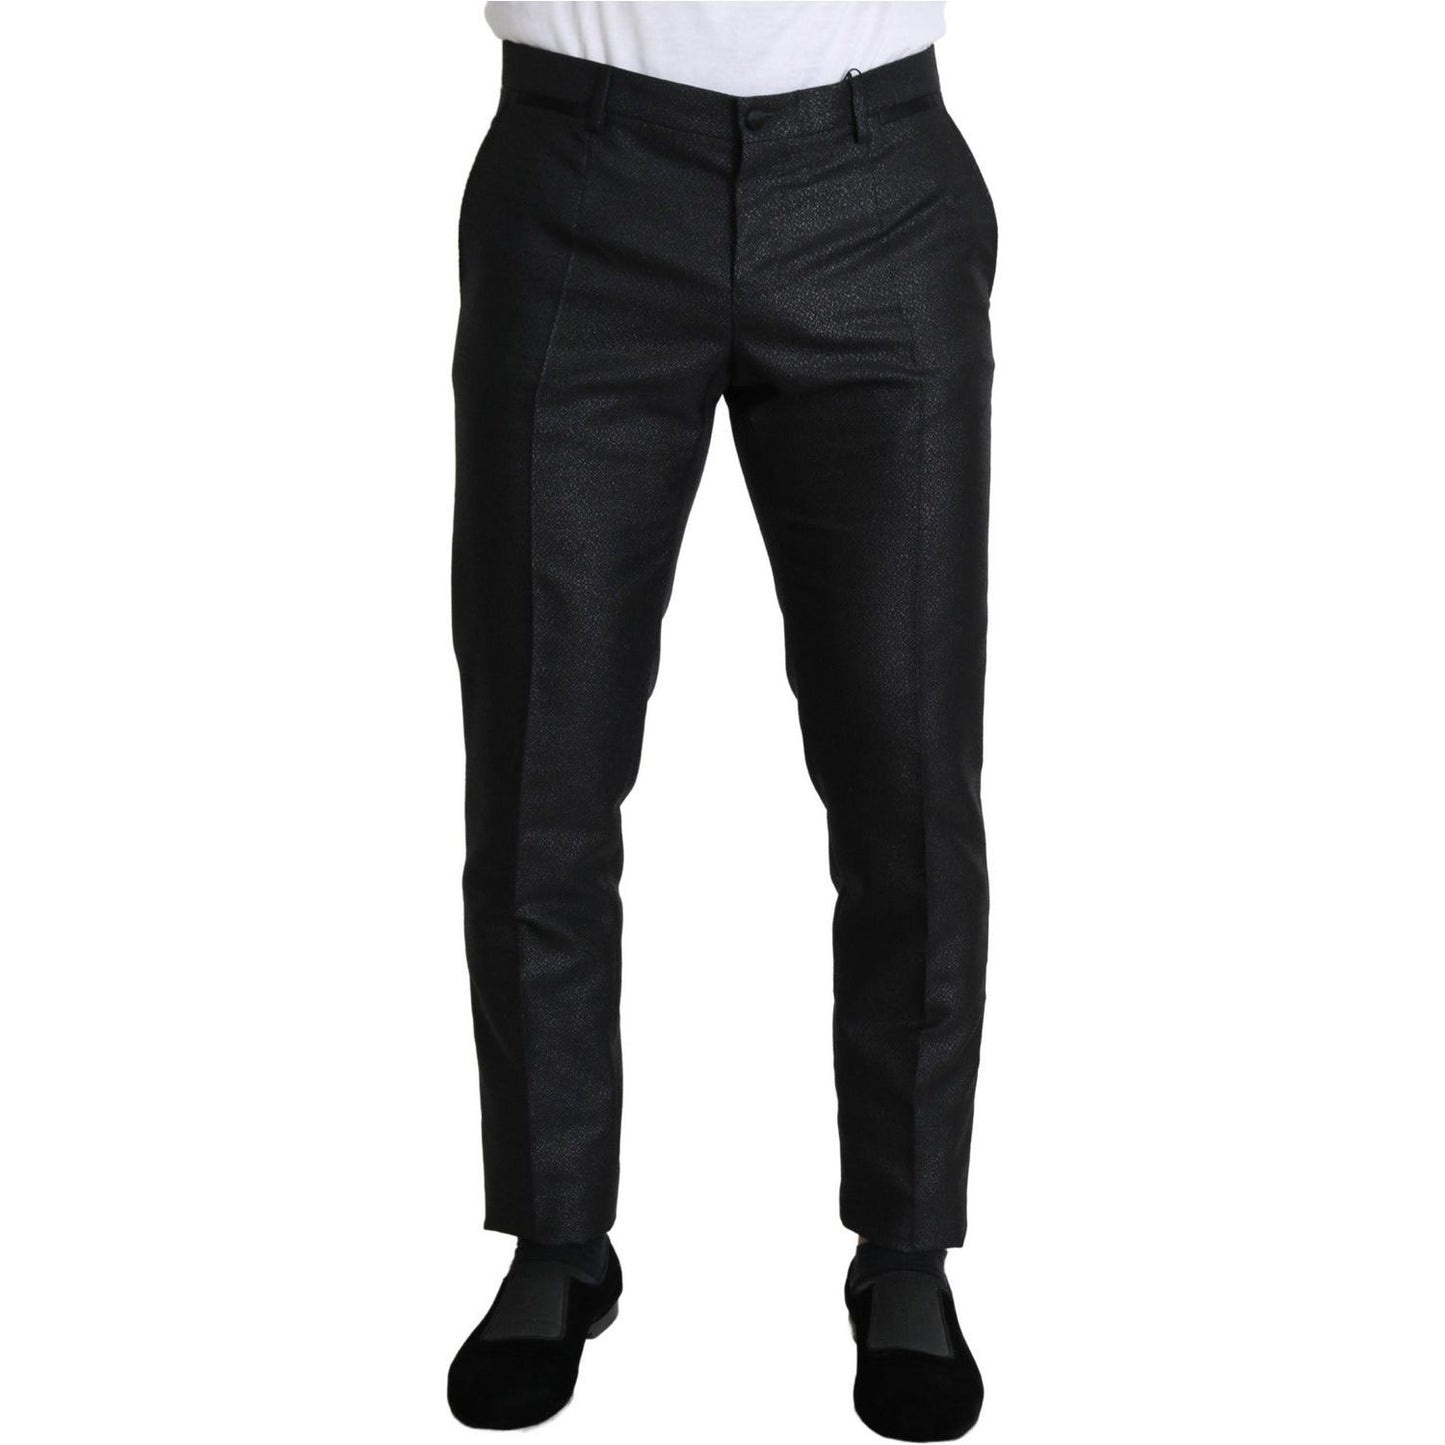 Dolce & Gabbana Elegant Metallic Black Dress Pants Jeans & Pants black-metallic-skinny-trouser-dress IMG_2238-scaled-0c474af6-3fd.jpg